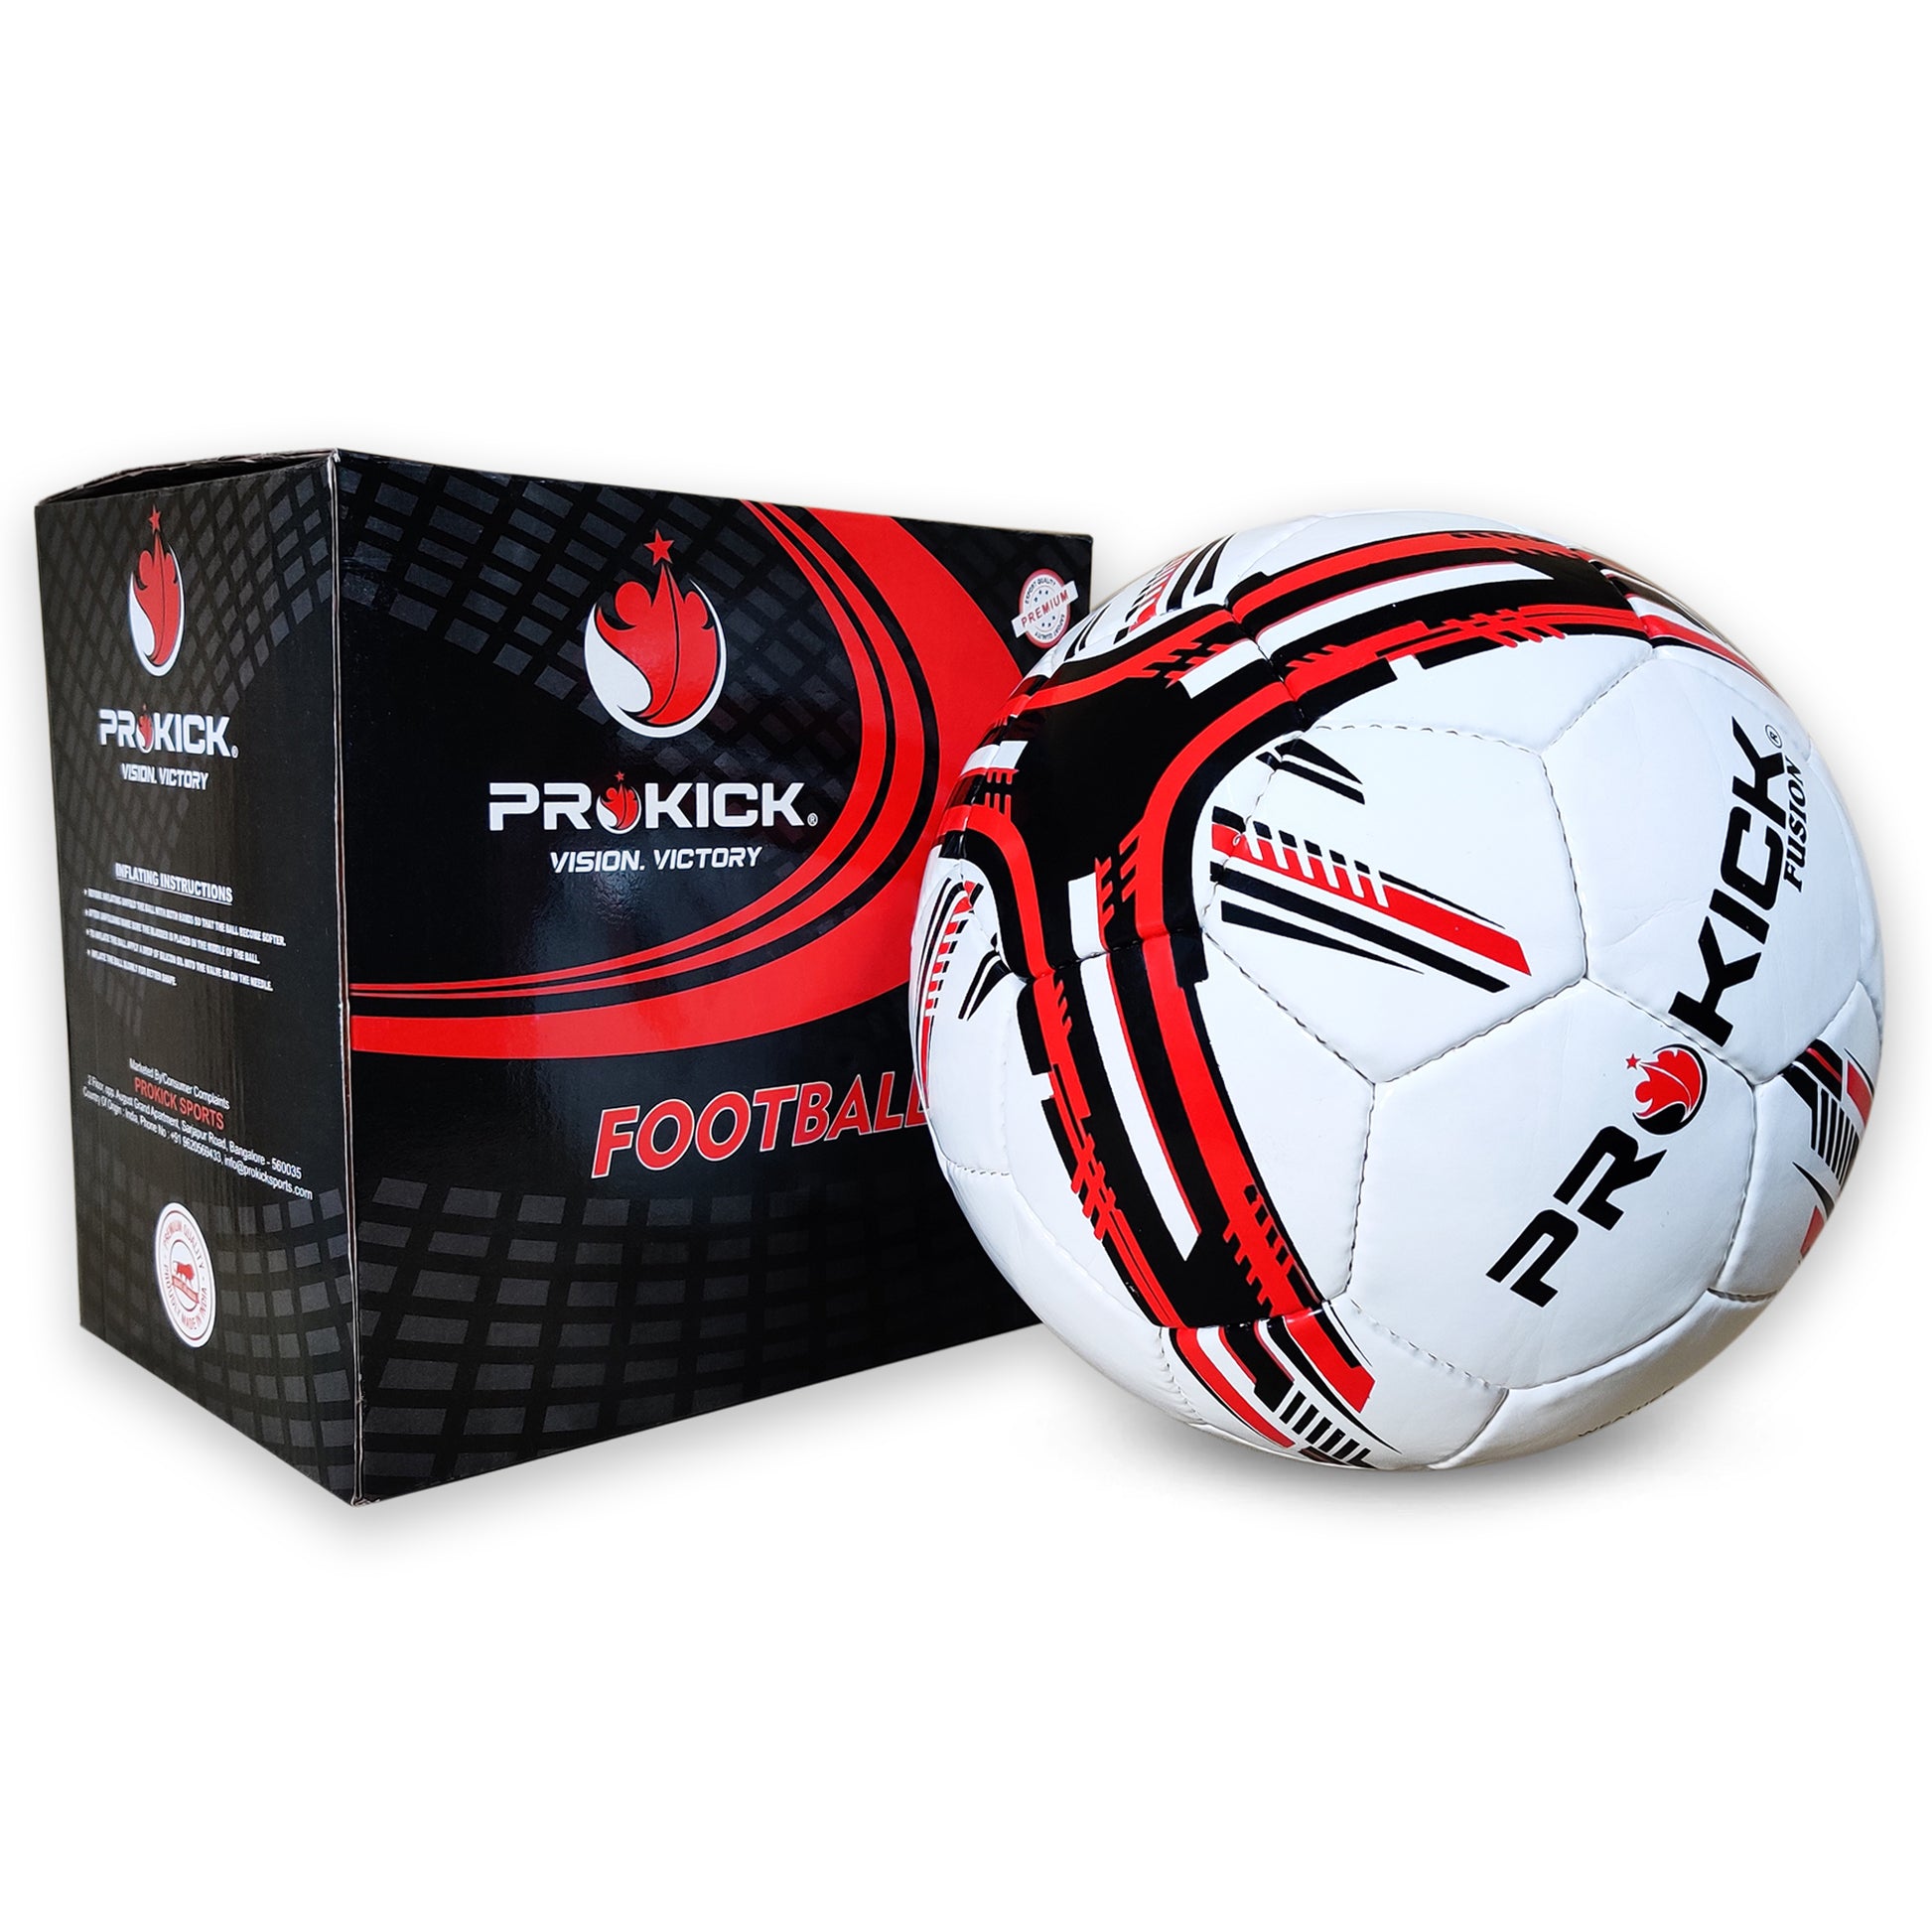 Prokick Fusion Hand Stitched 32 Panel PU Football, Size 5 (White/Black/Red) - Best Price online Prokicksports.com